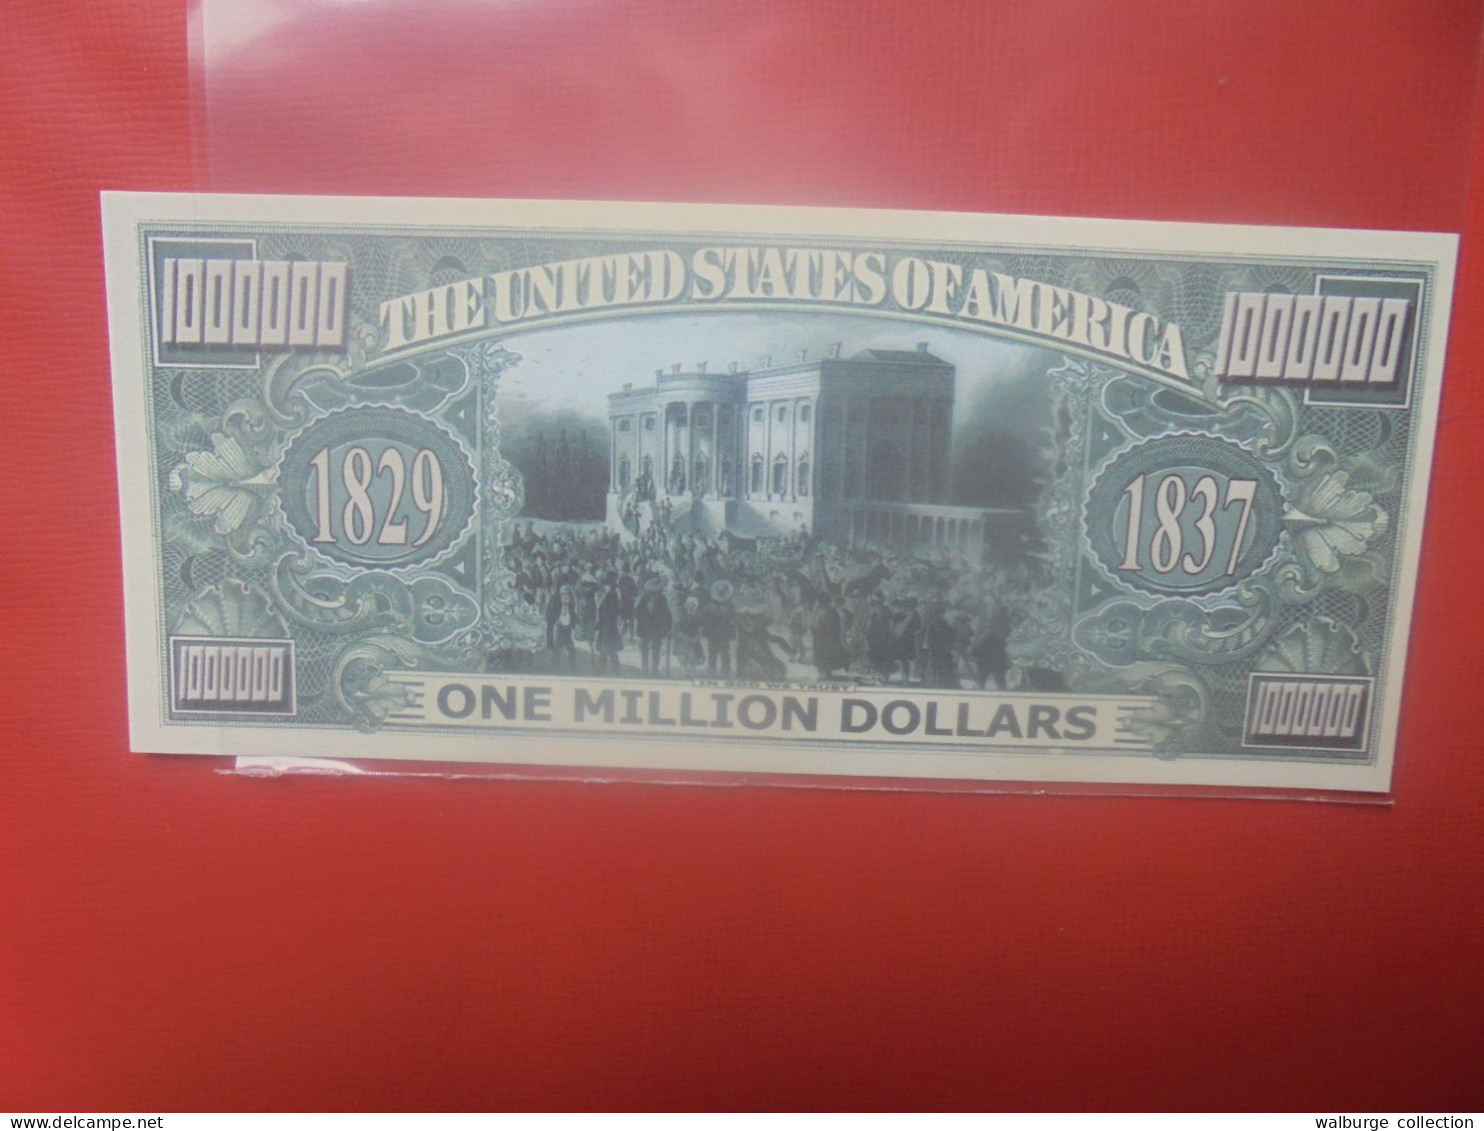 Présidentiel Dollar 2004 "Jackson" 7e Président (B.30) - Collections